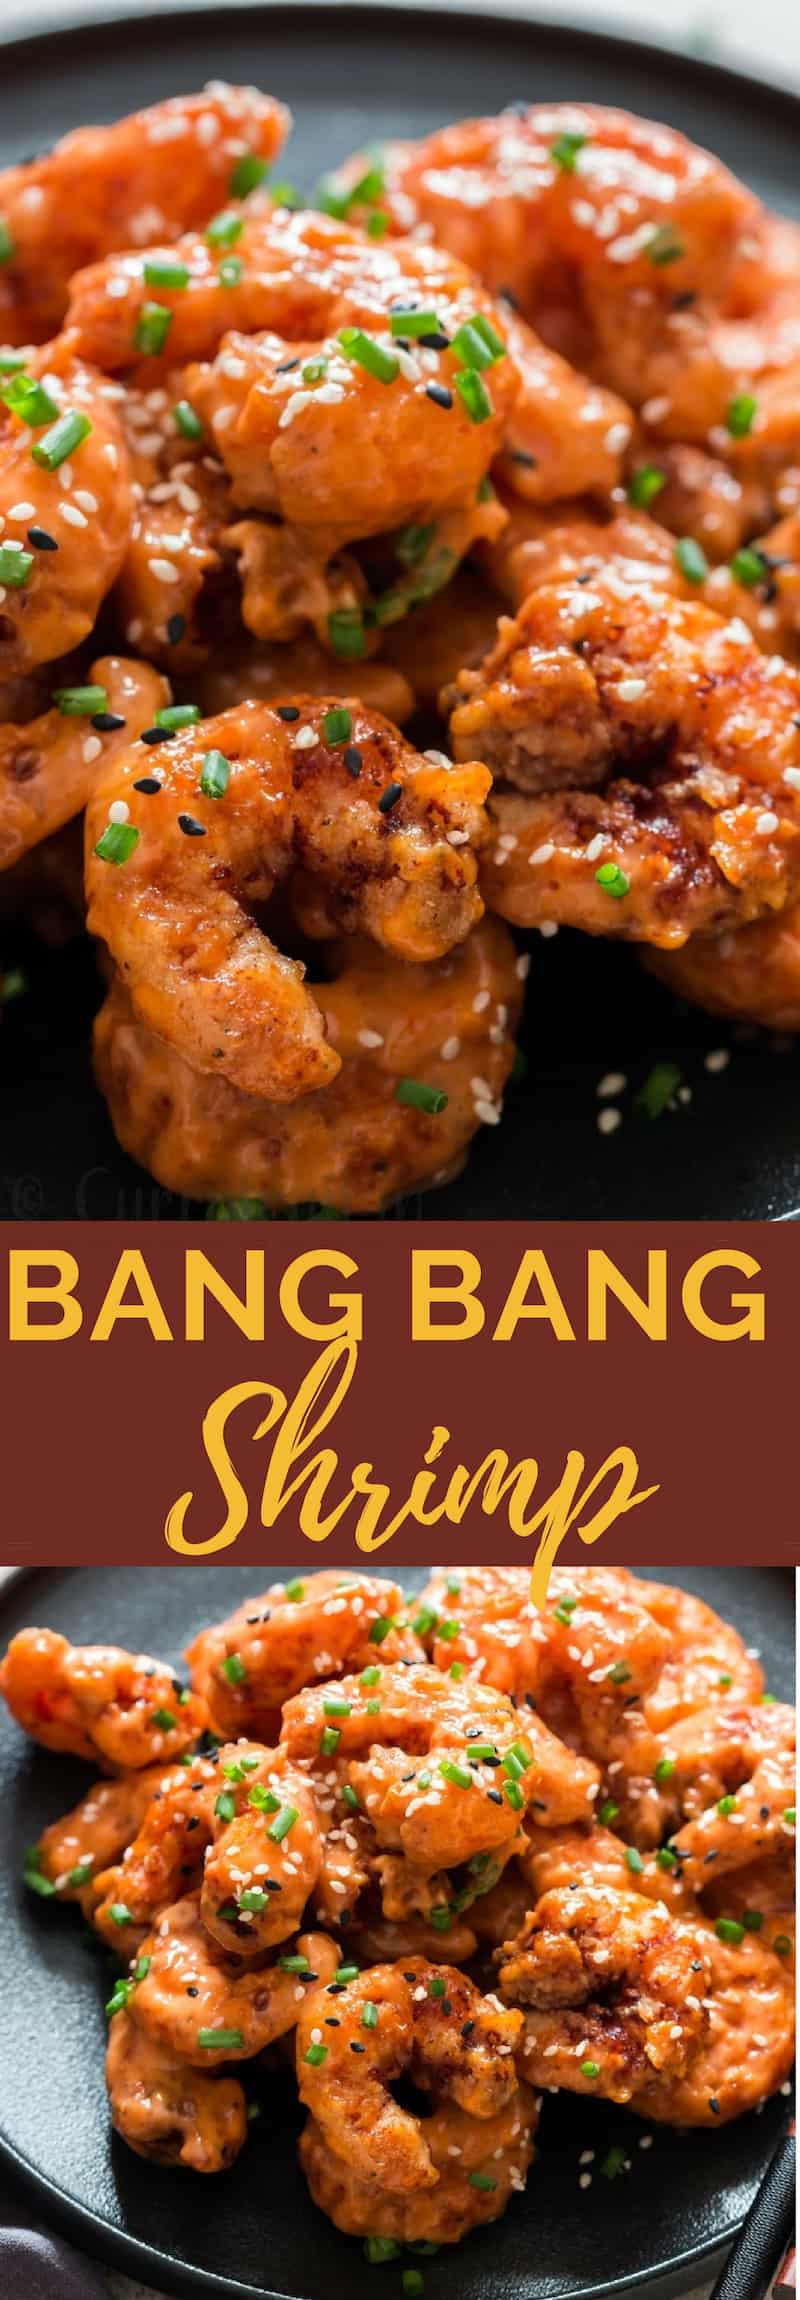 bang bang shrimp copycat recipe with text overlay